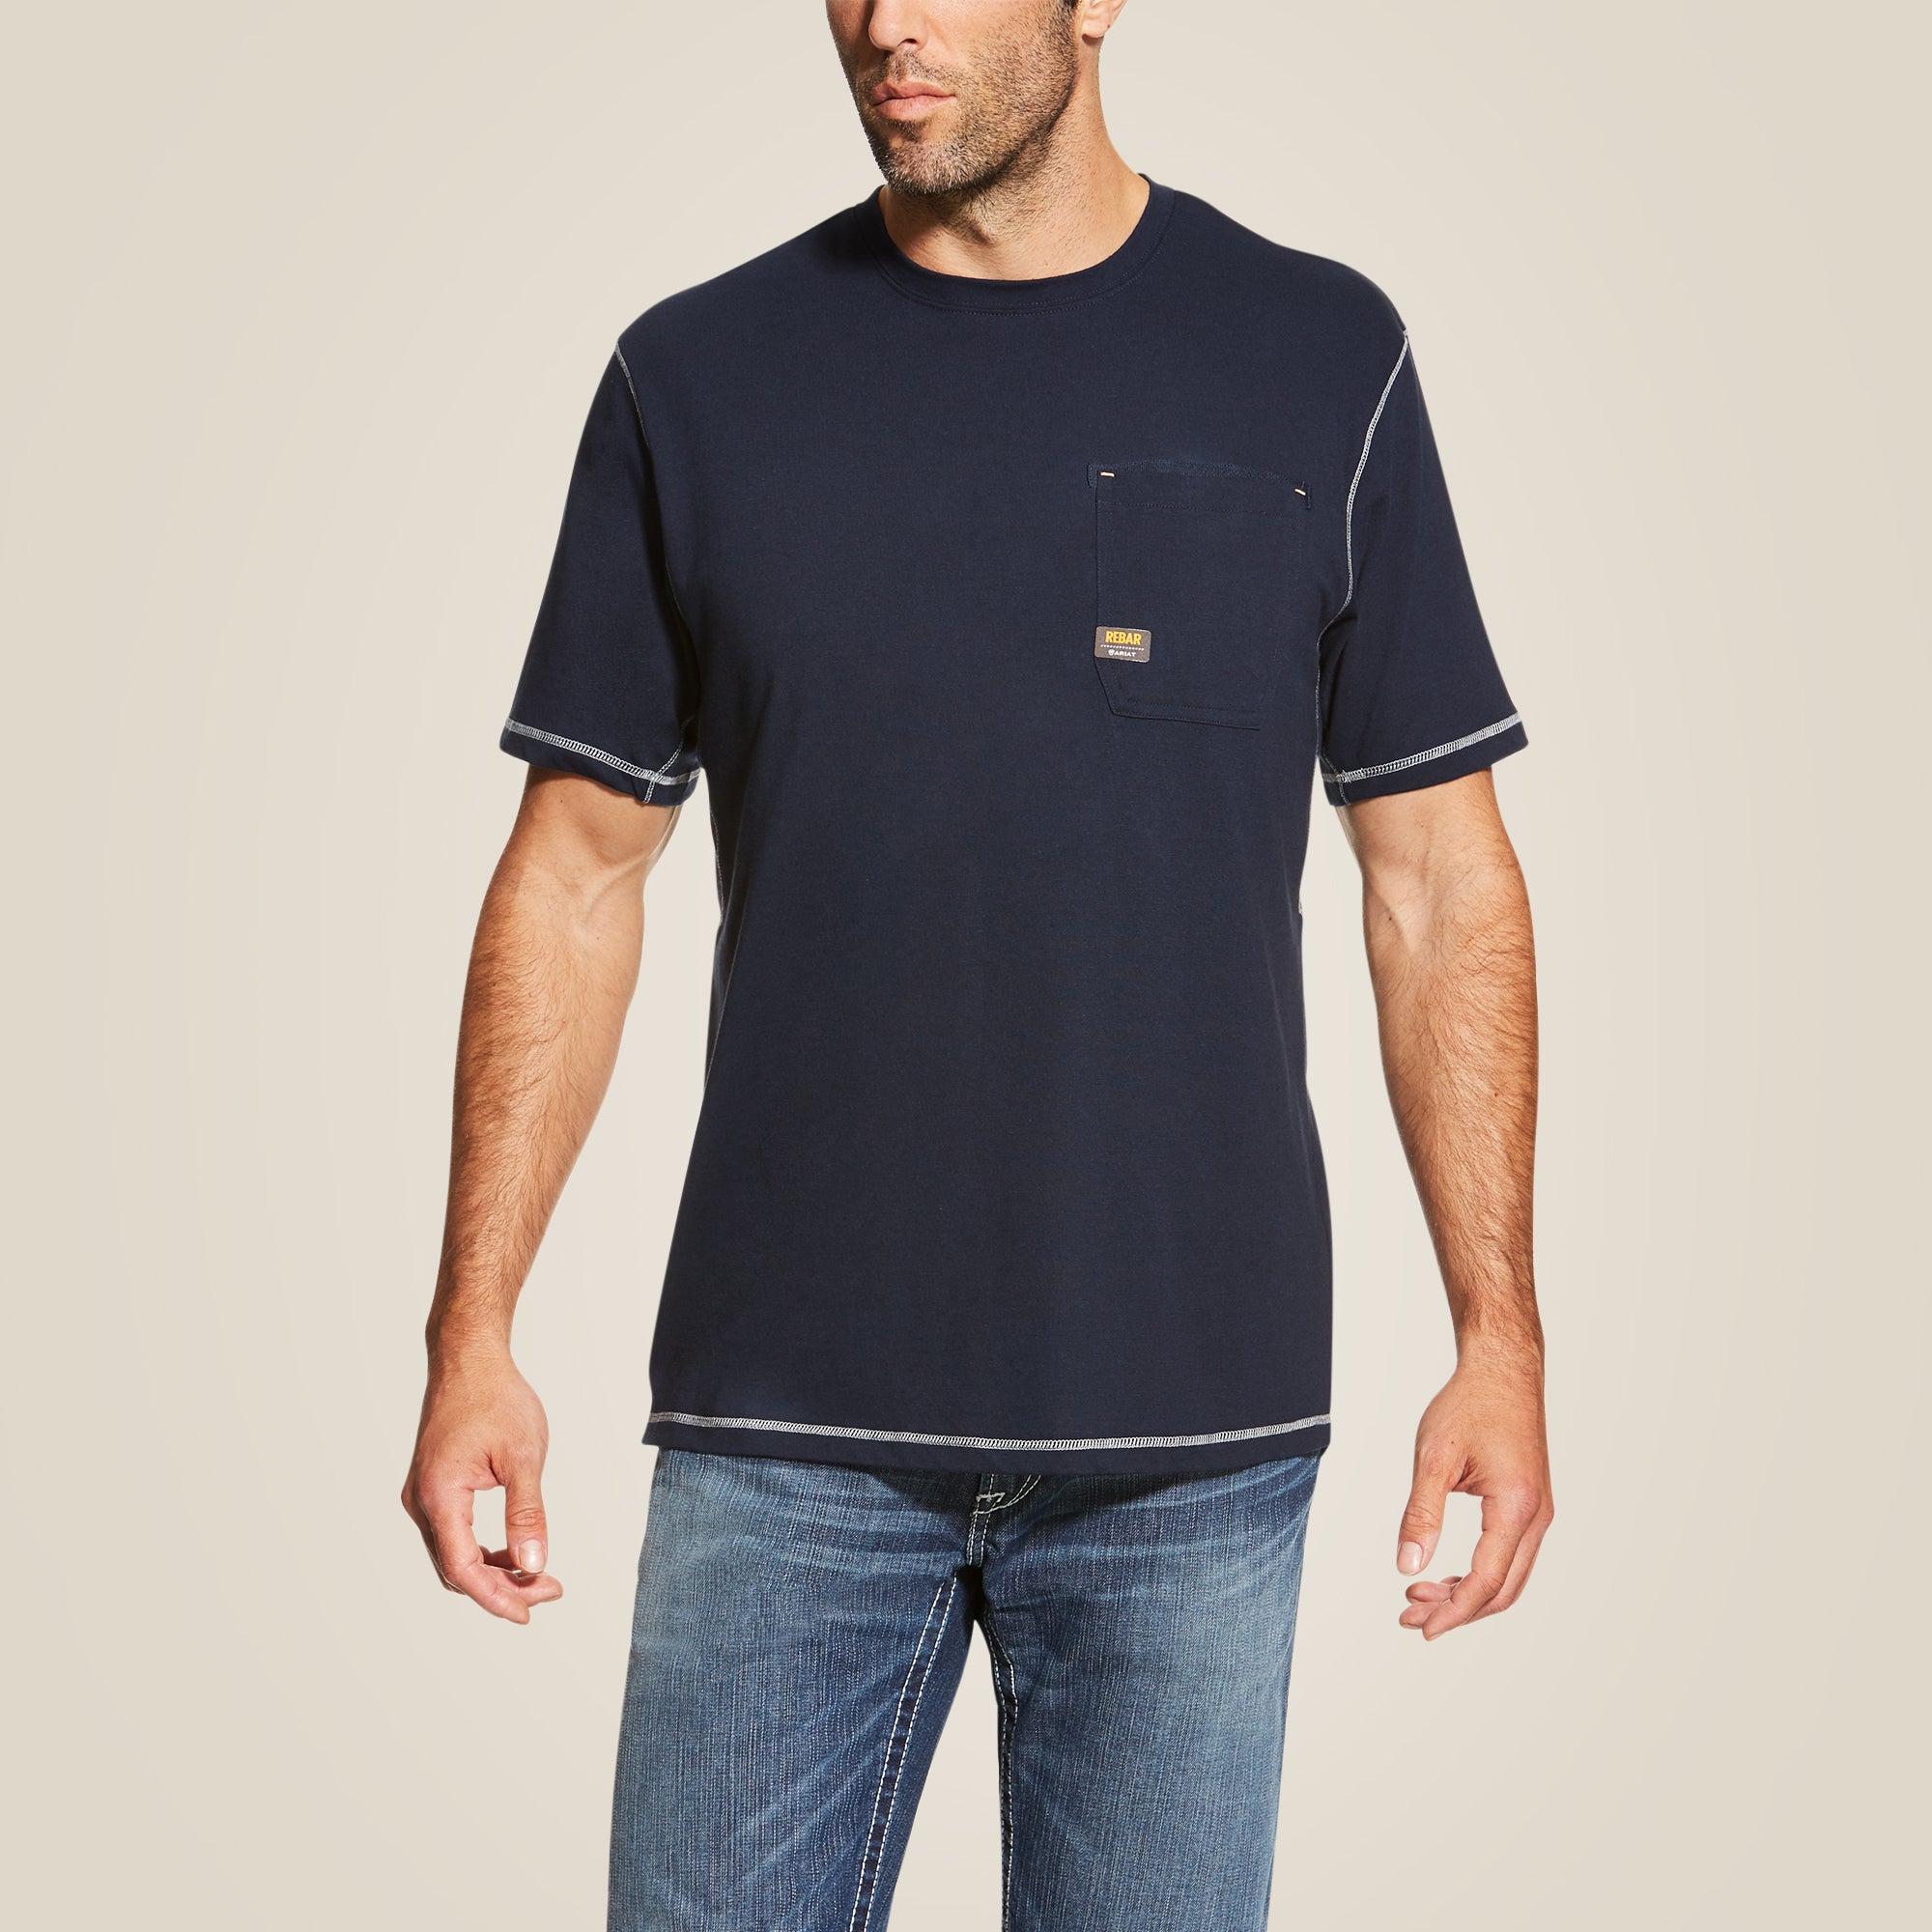 Kurzarm Shirt MNS Rebar Workman T-Shirt navy | 10019132